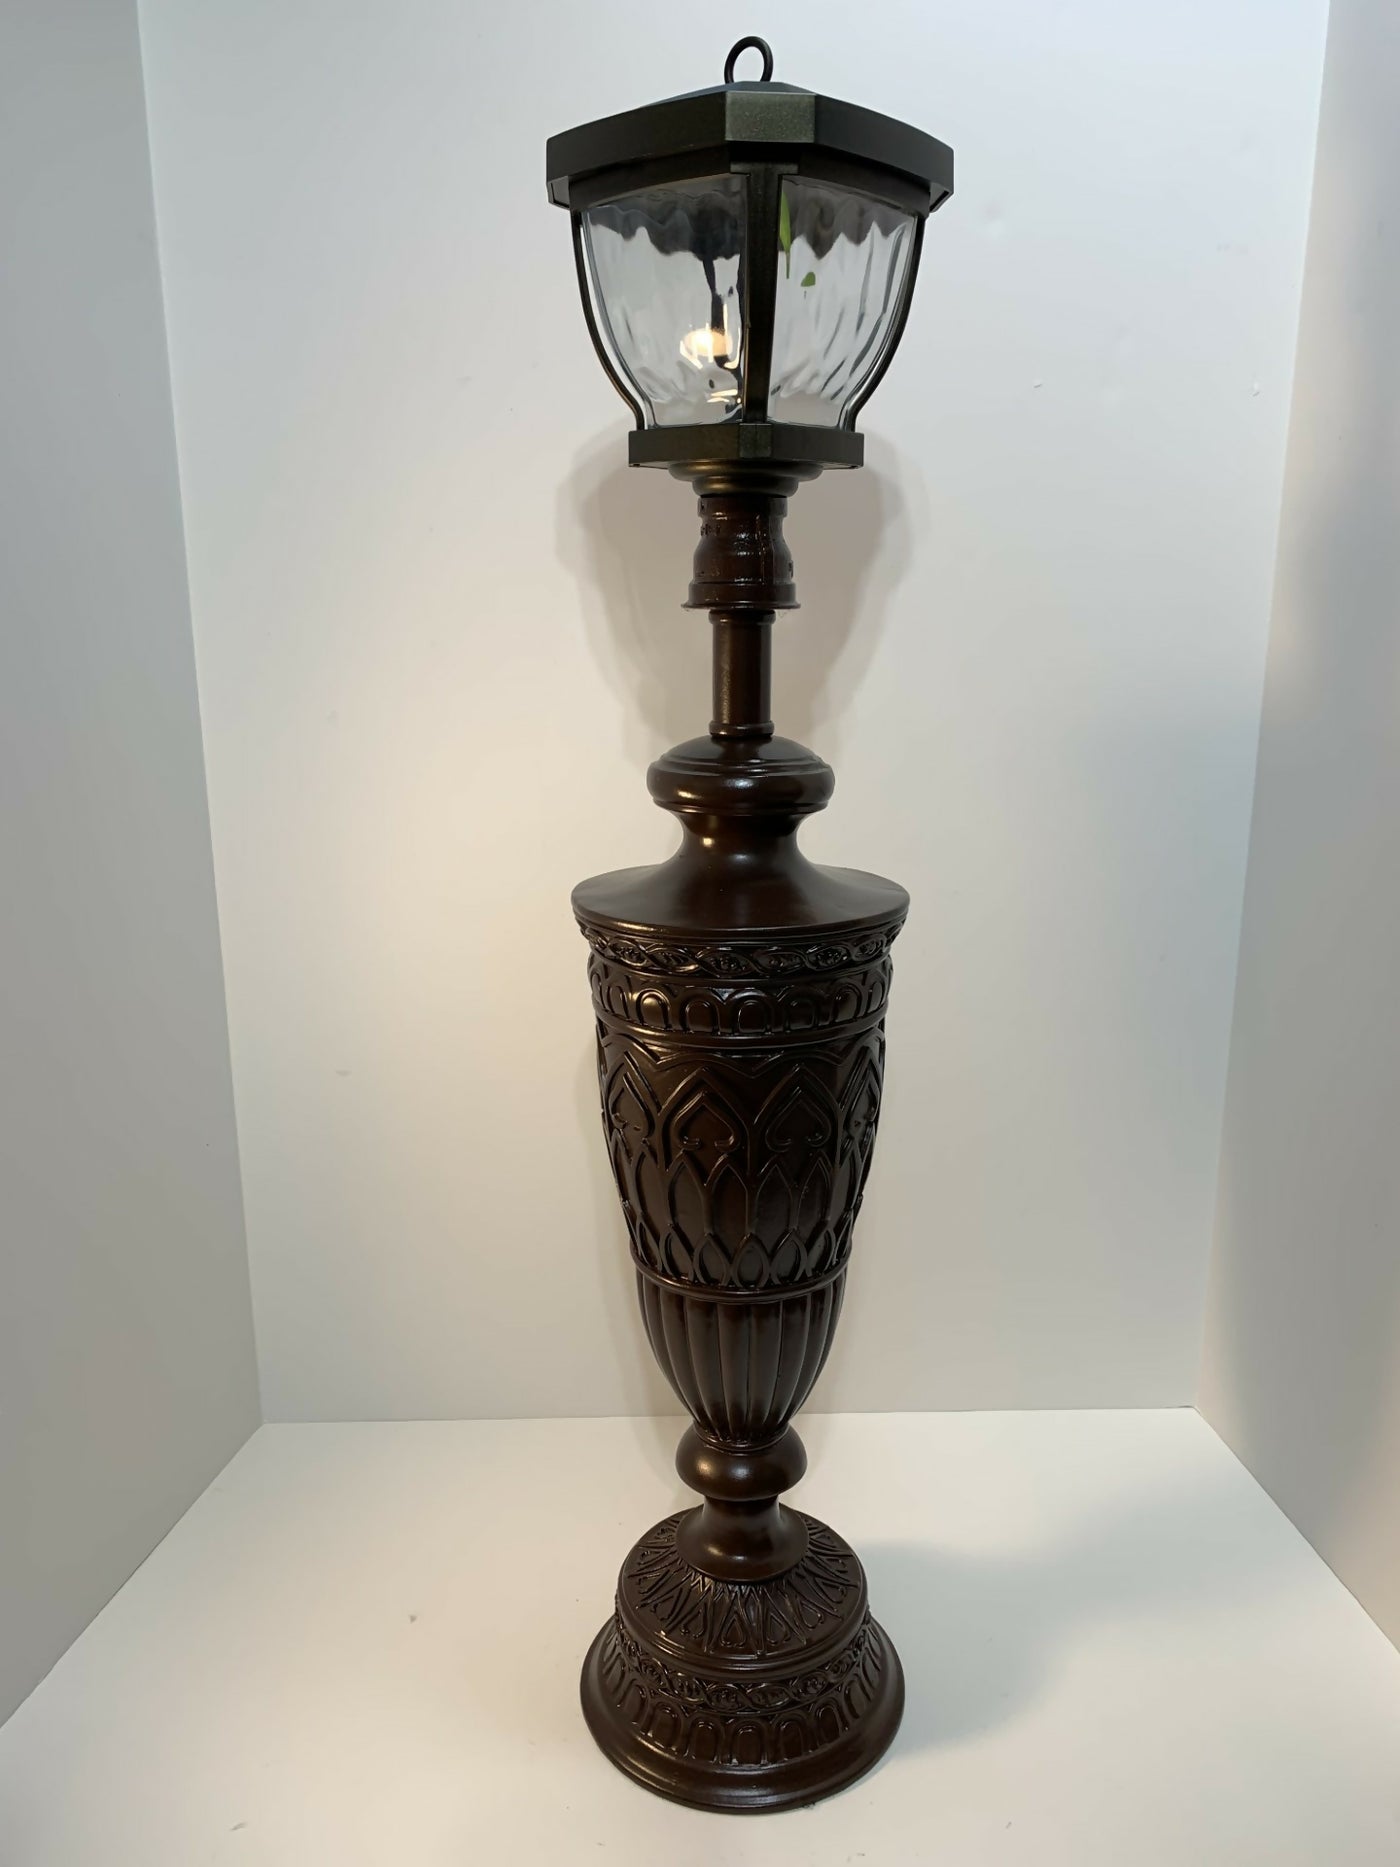 Gorgeous large bronze toned solar lamp